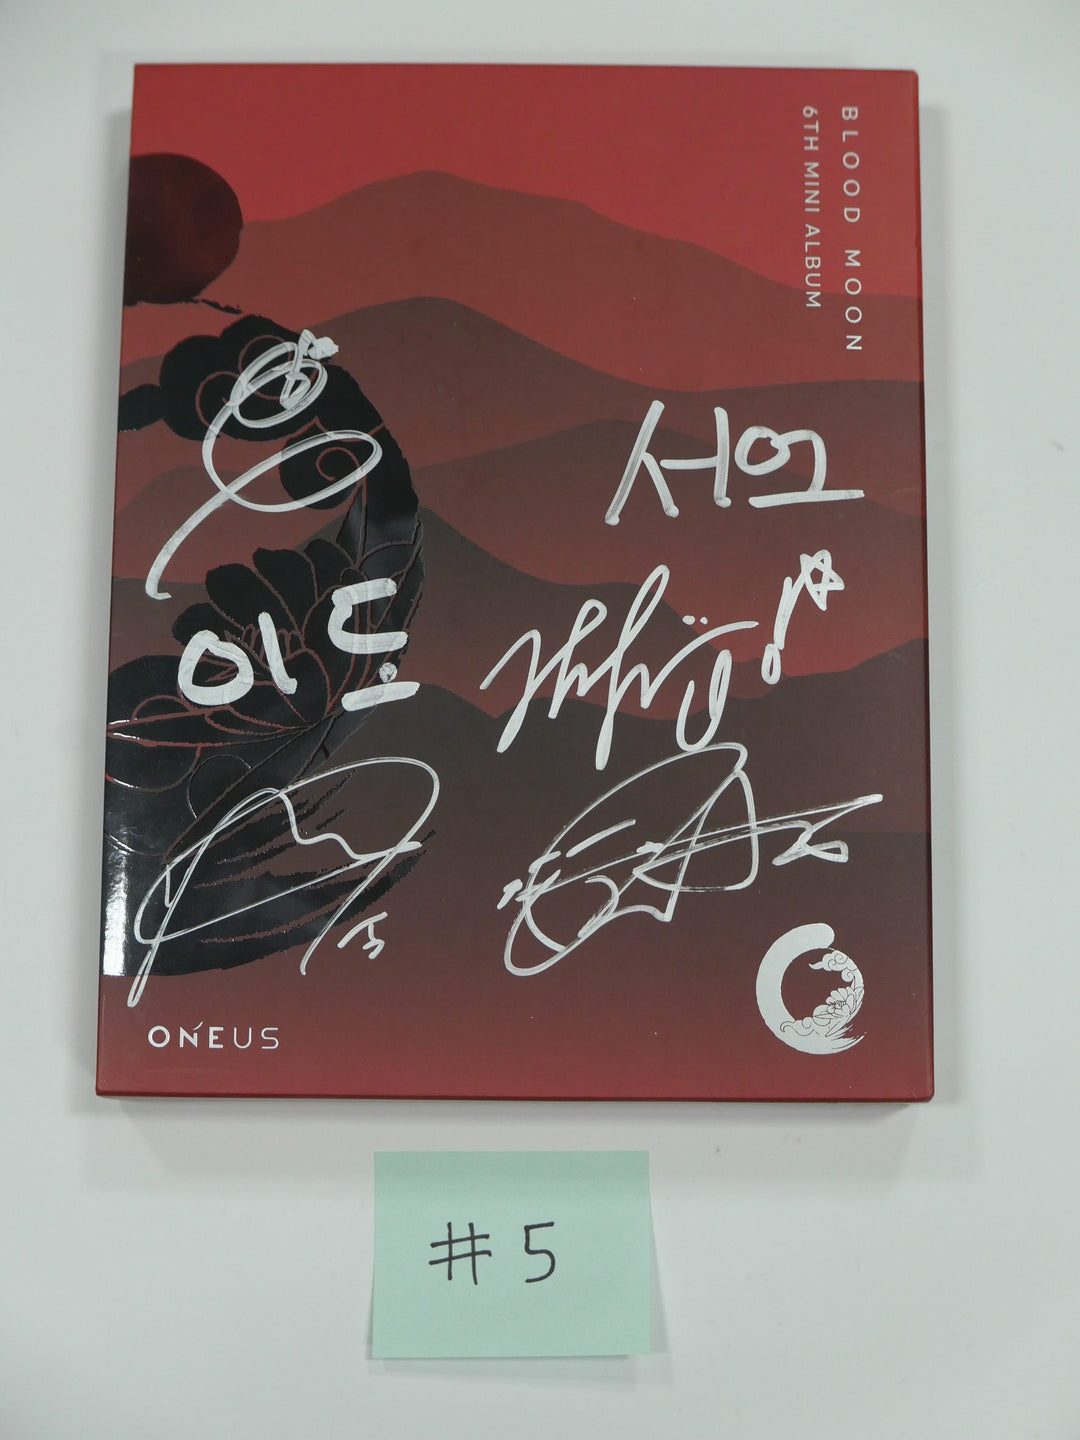 Oneus "BLOOD MOON" 6th Mini - Hand Autographed(Signed) Promo Album